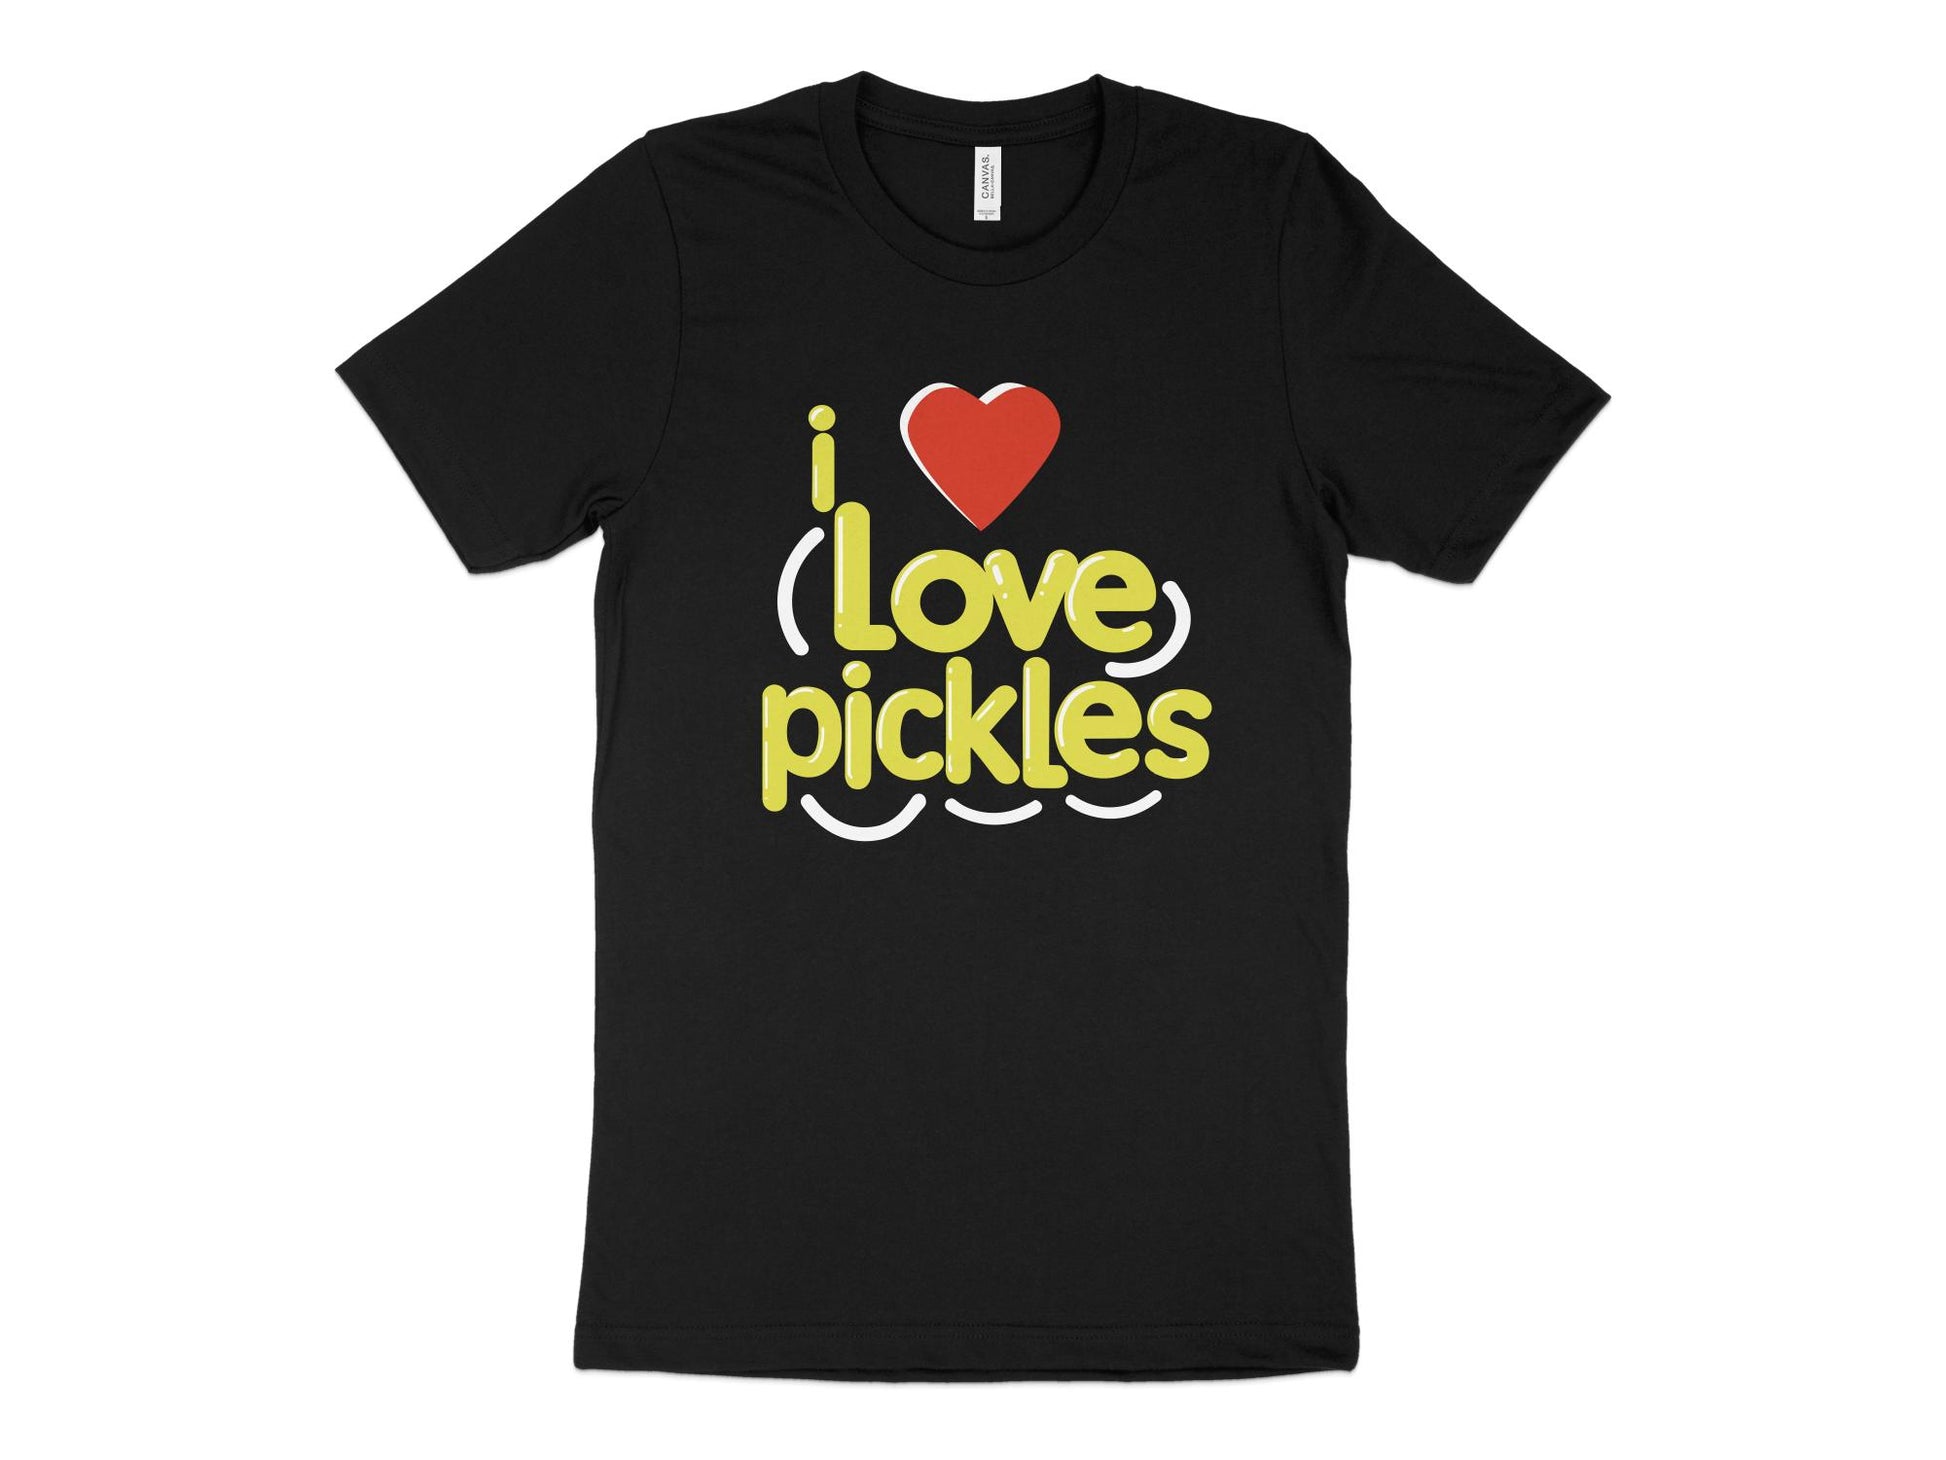 I Love Pickles Shirt, black